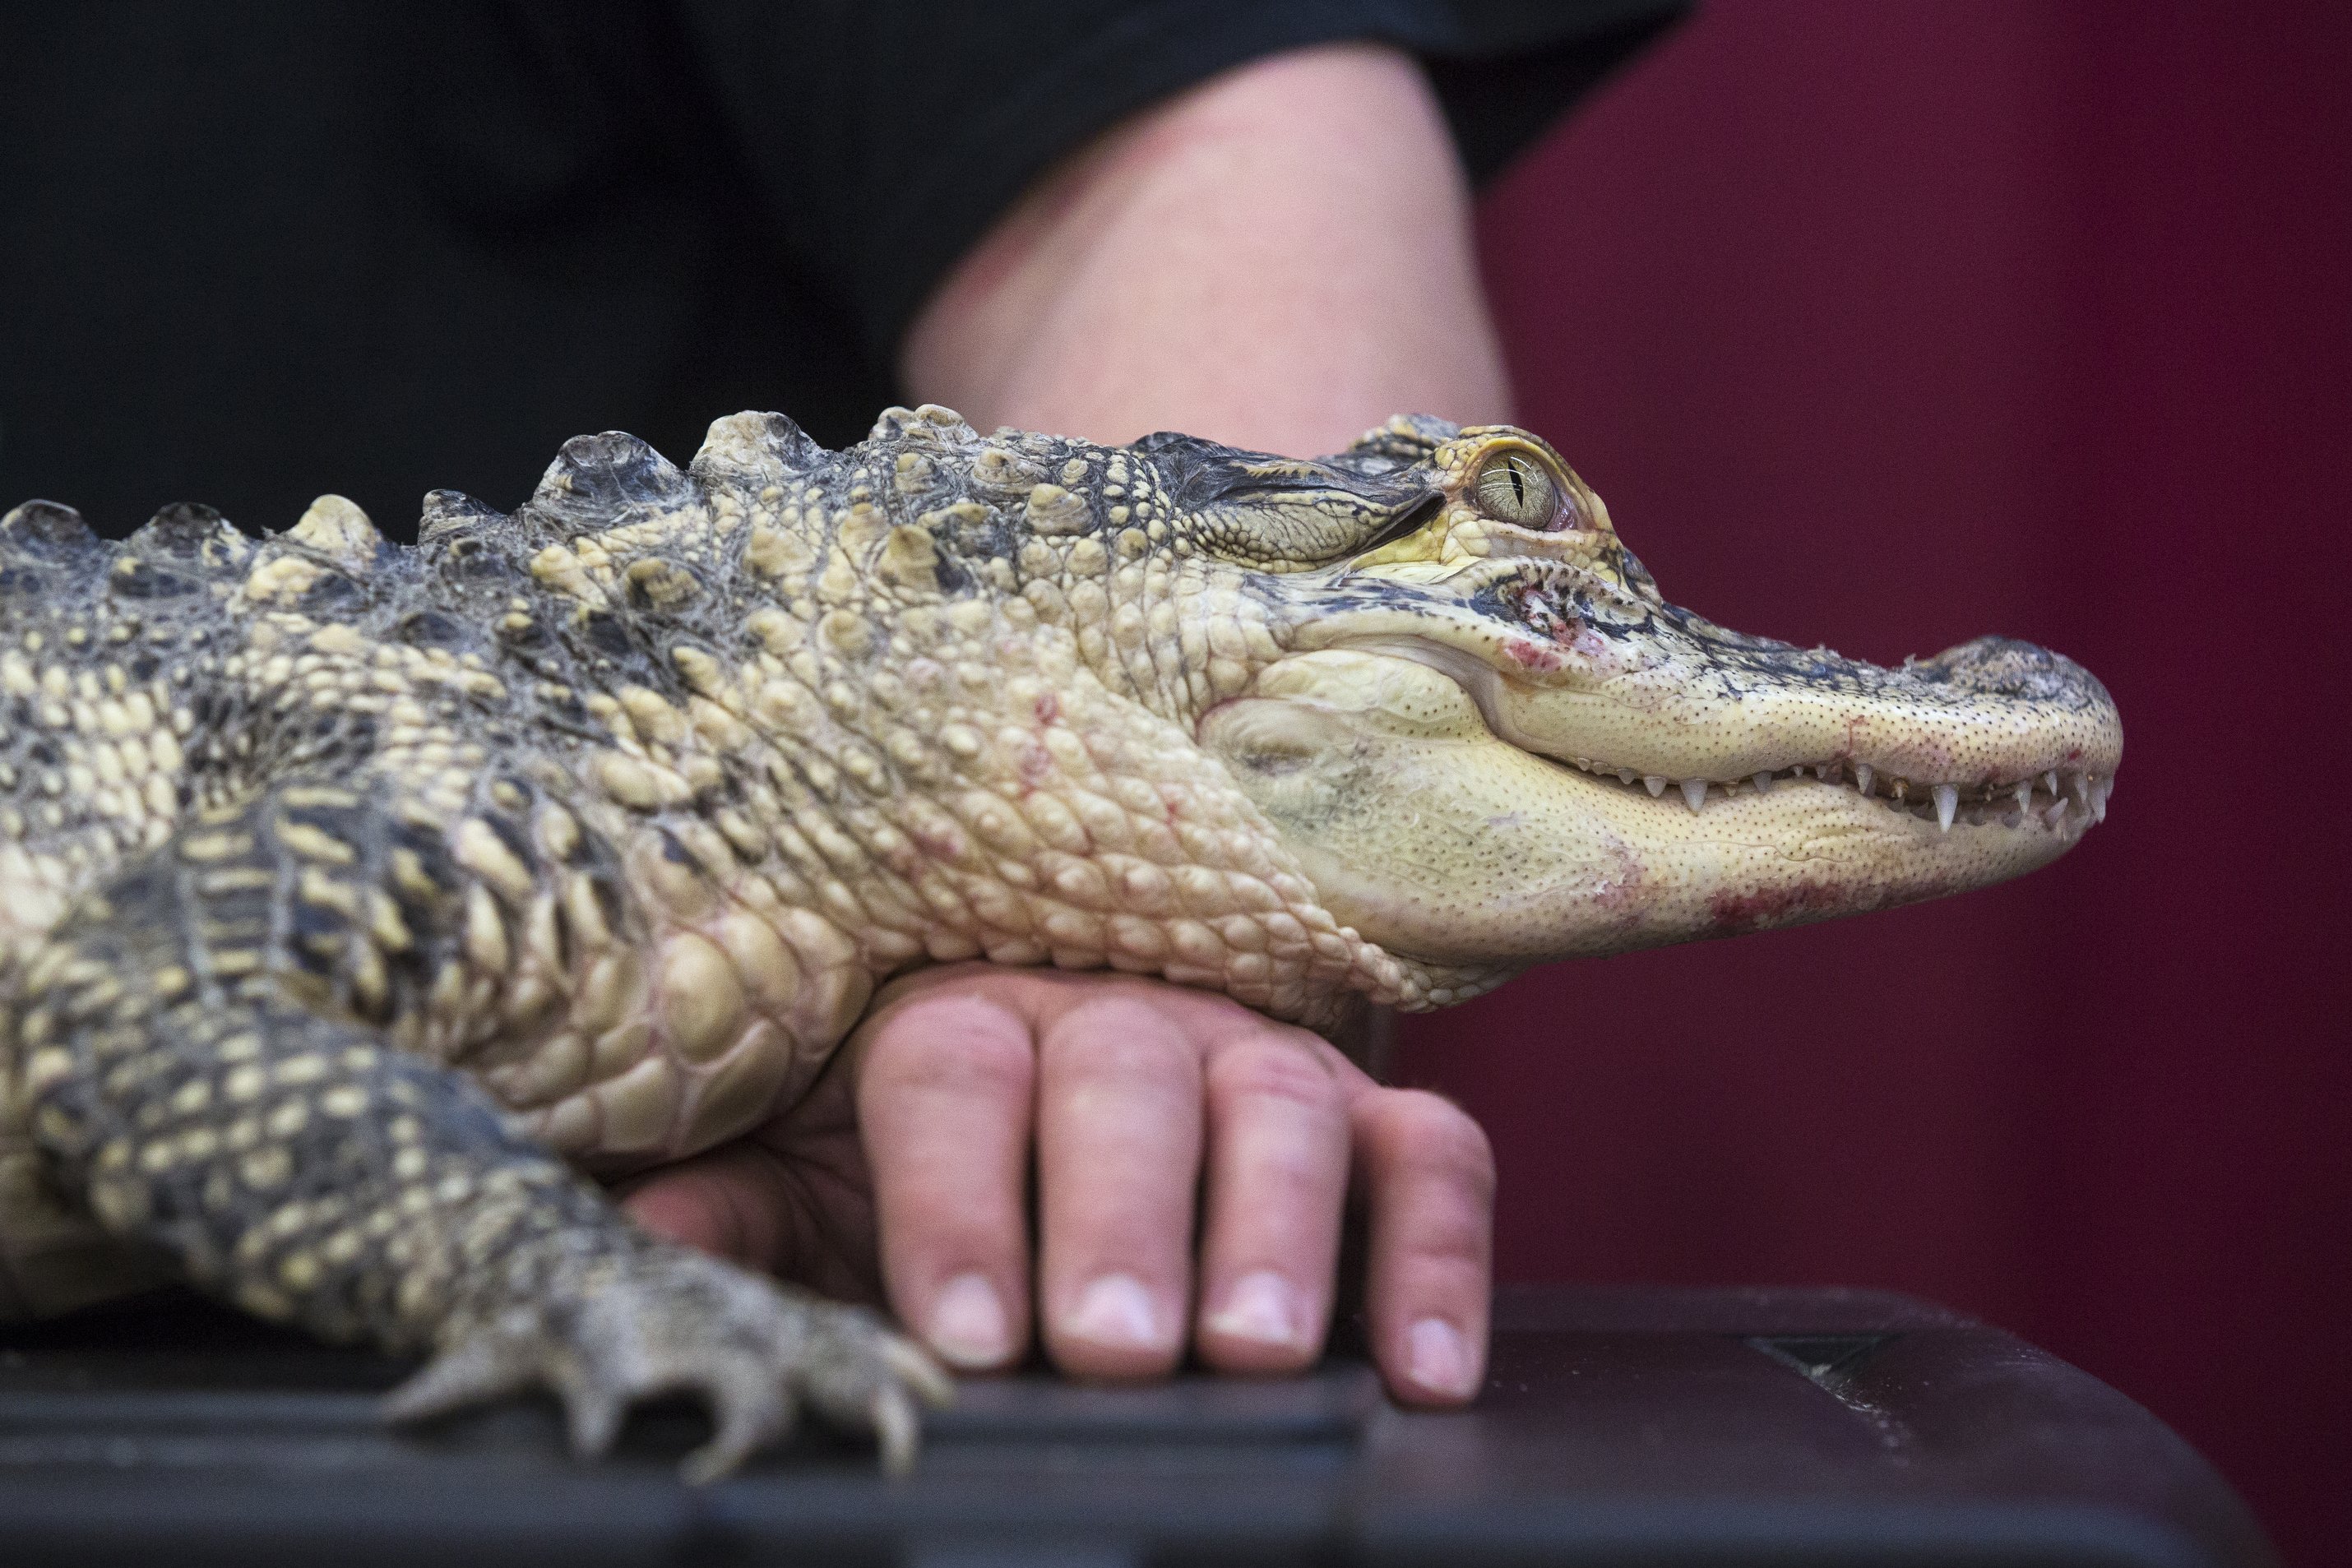 Baby alligator found walking in Metro Detroit street - mlive.com